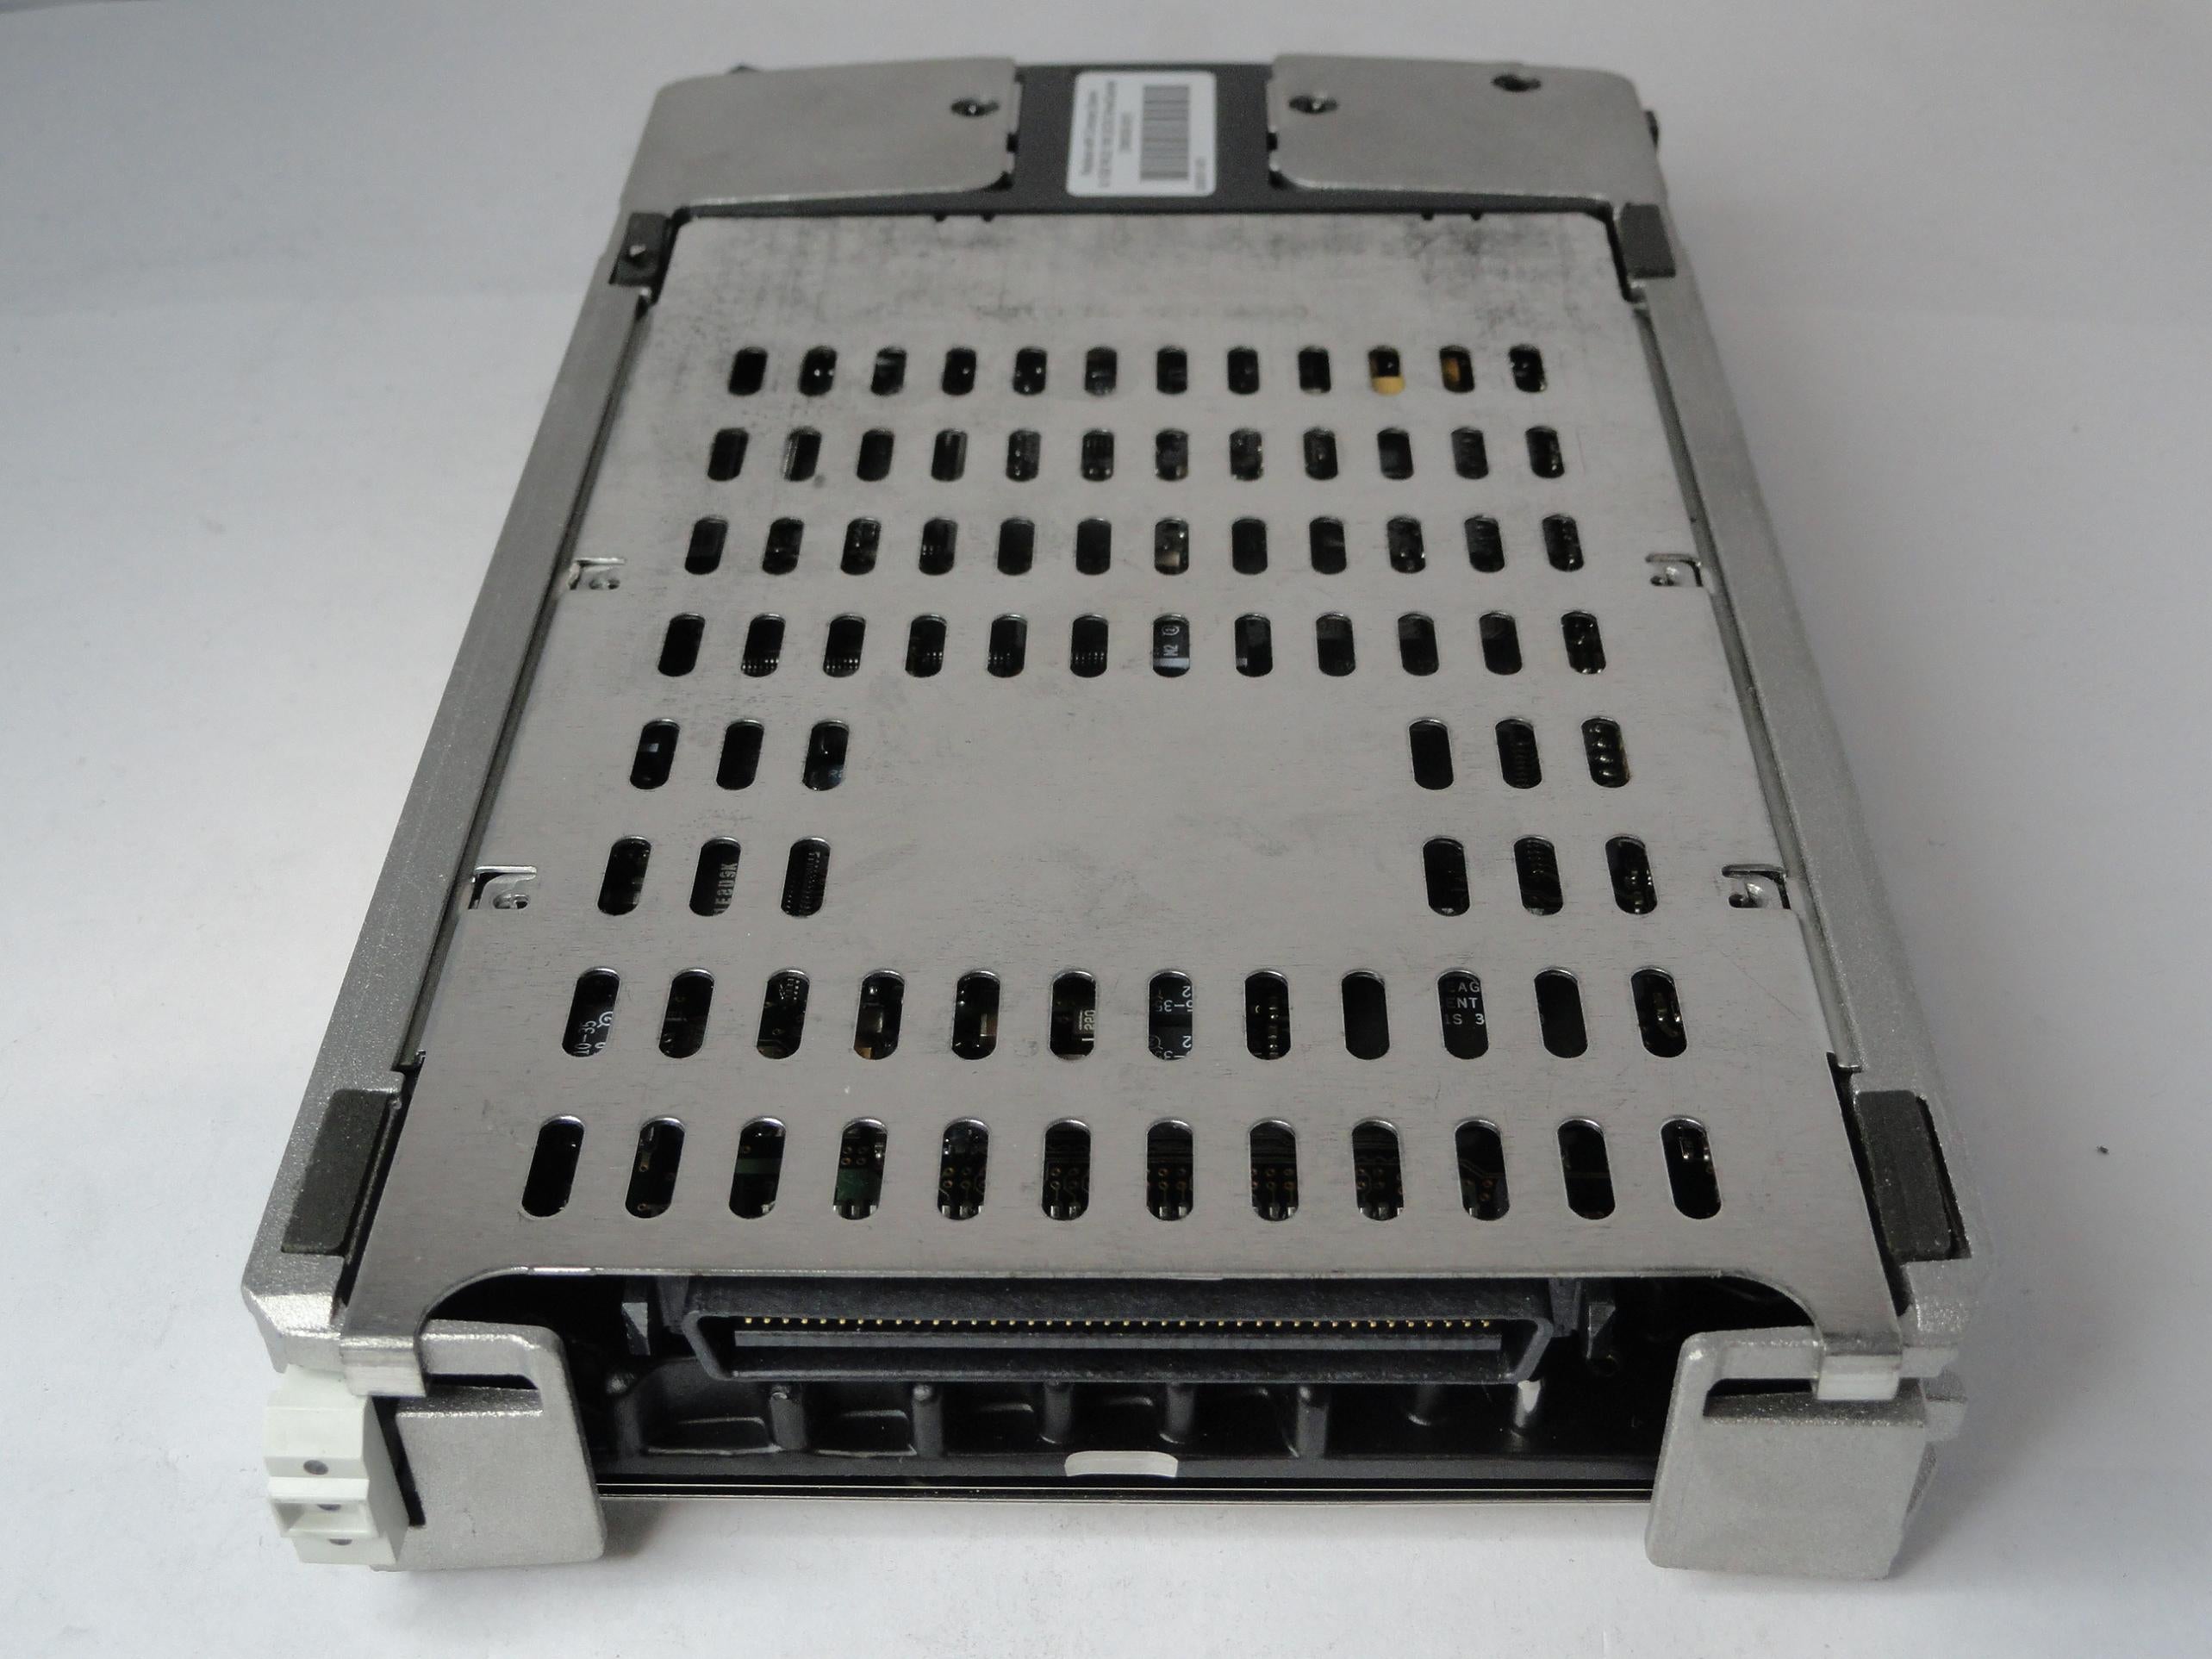 PR20484_9L9006-040_Seagate Compaq 9.1GB SCSI 80 Pin 10Krpm 3.5in HDD - Image4